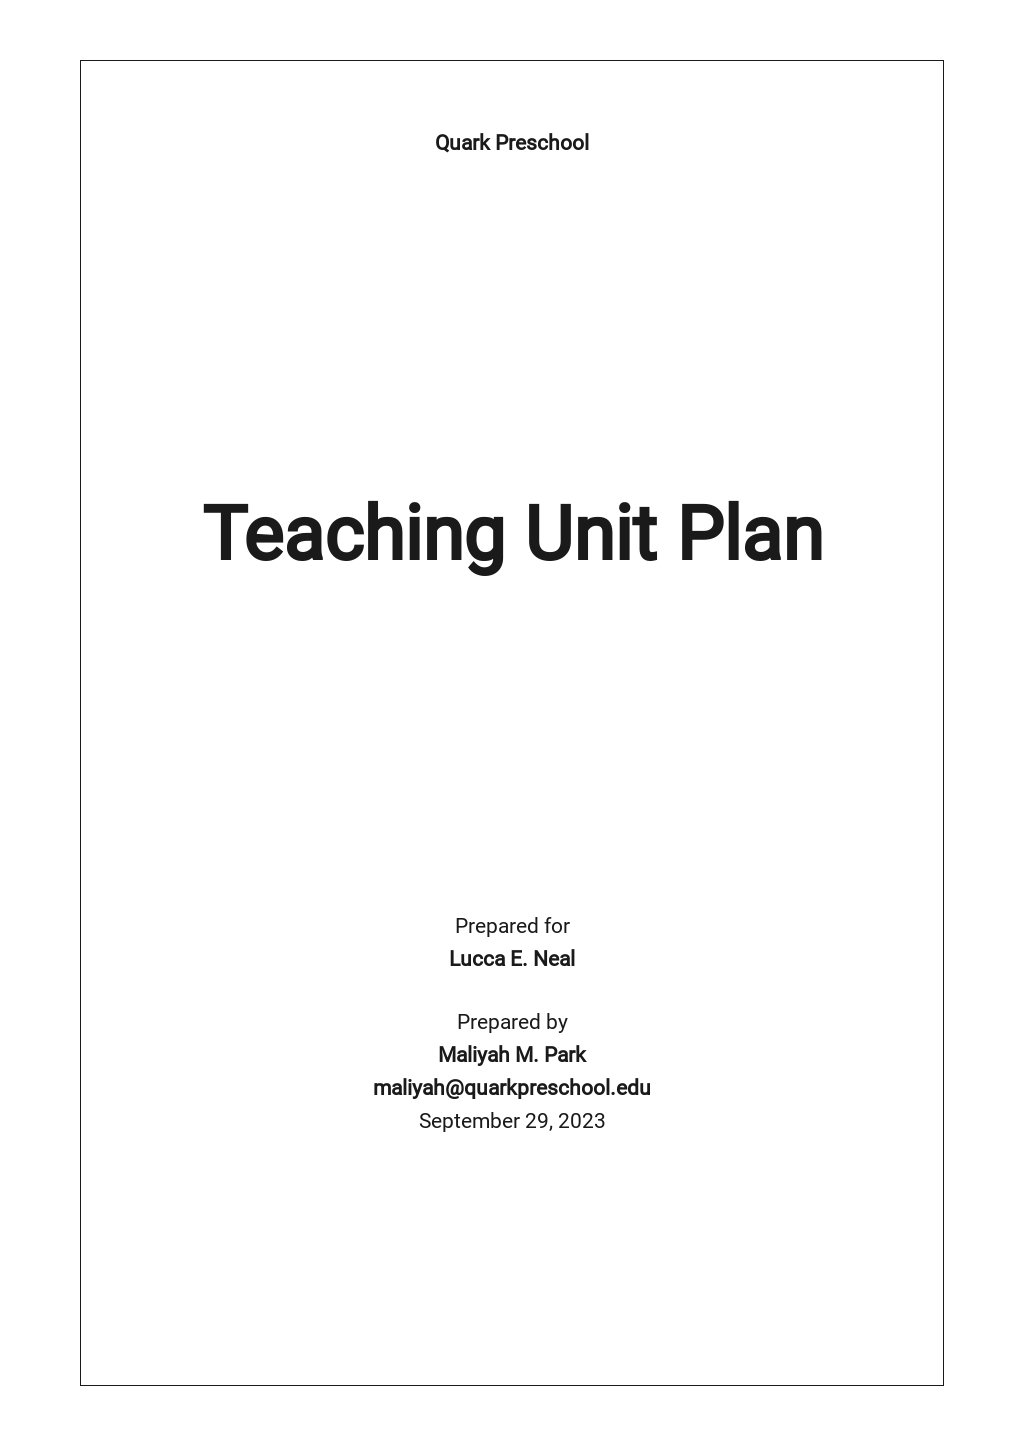 Teaching Unit Plan Template.jpe